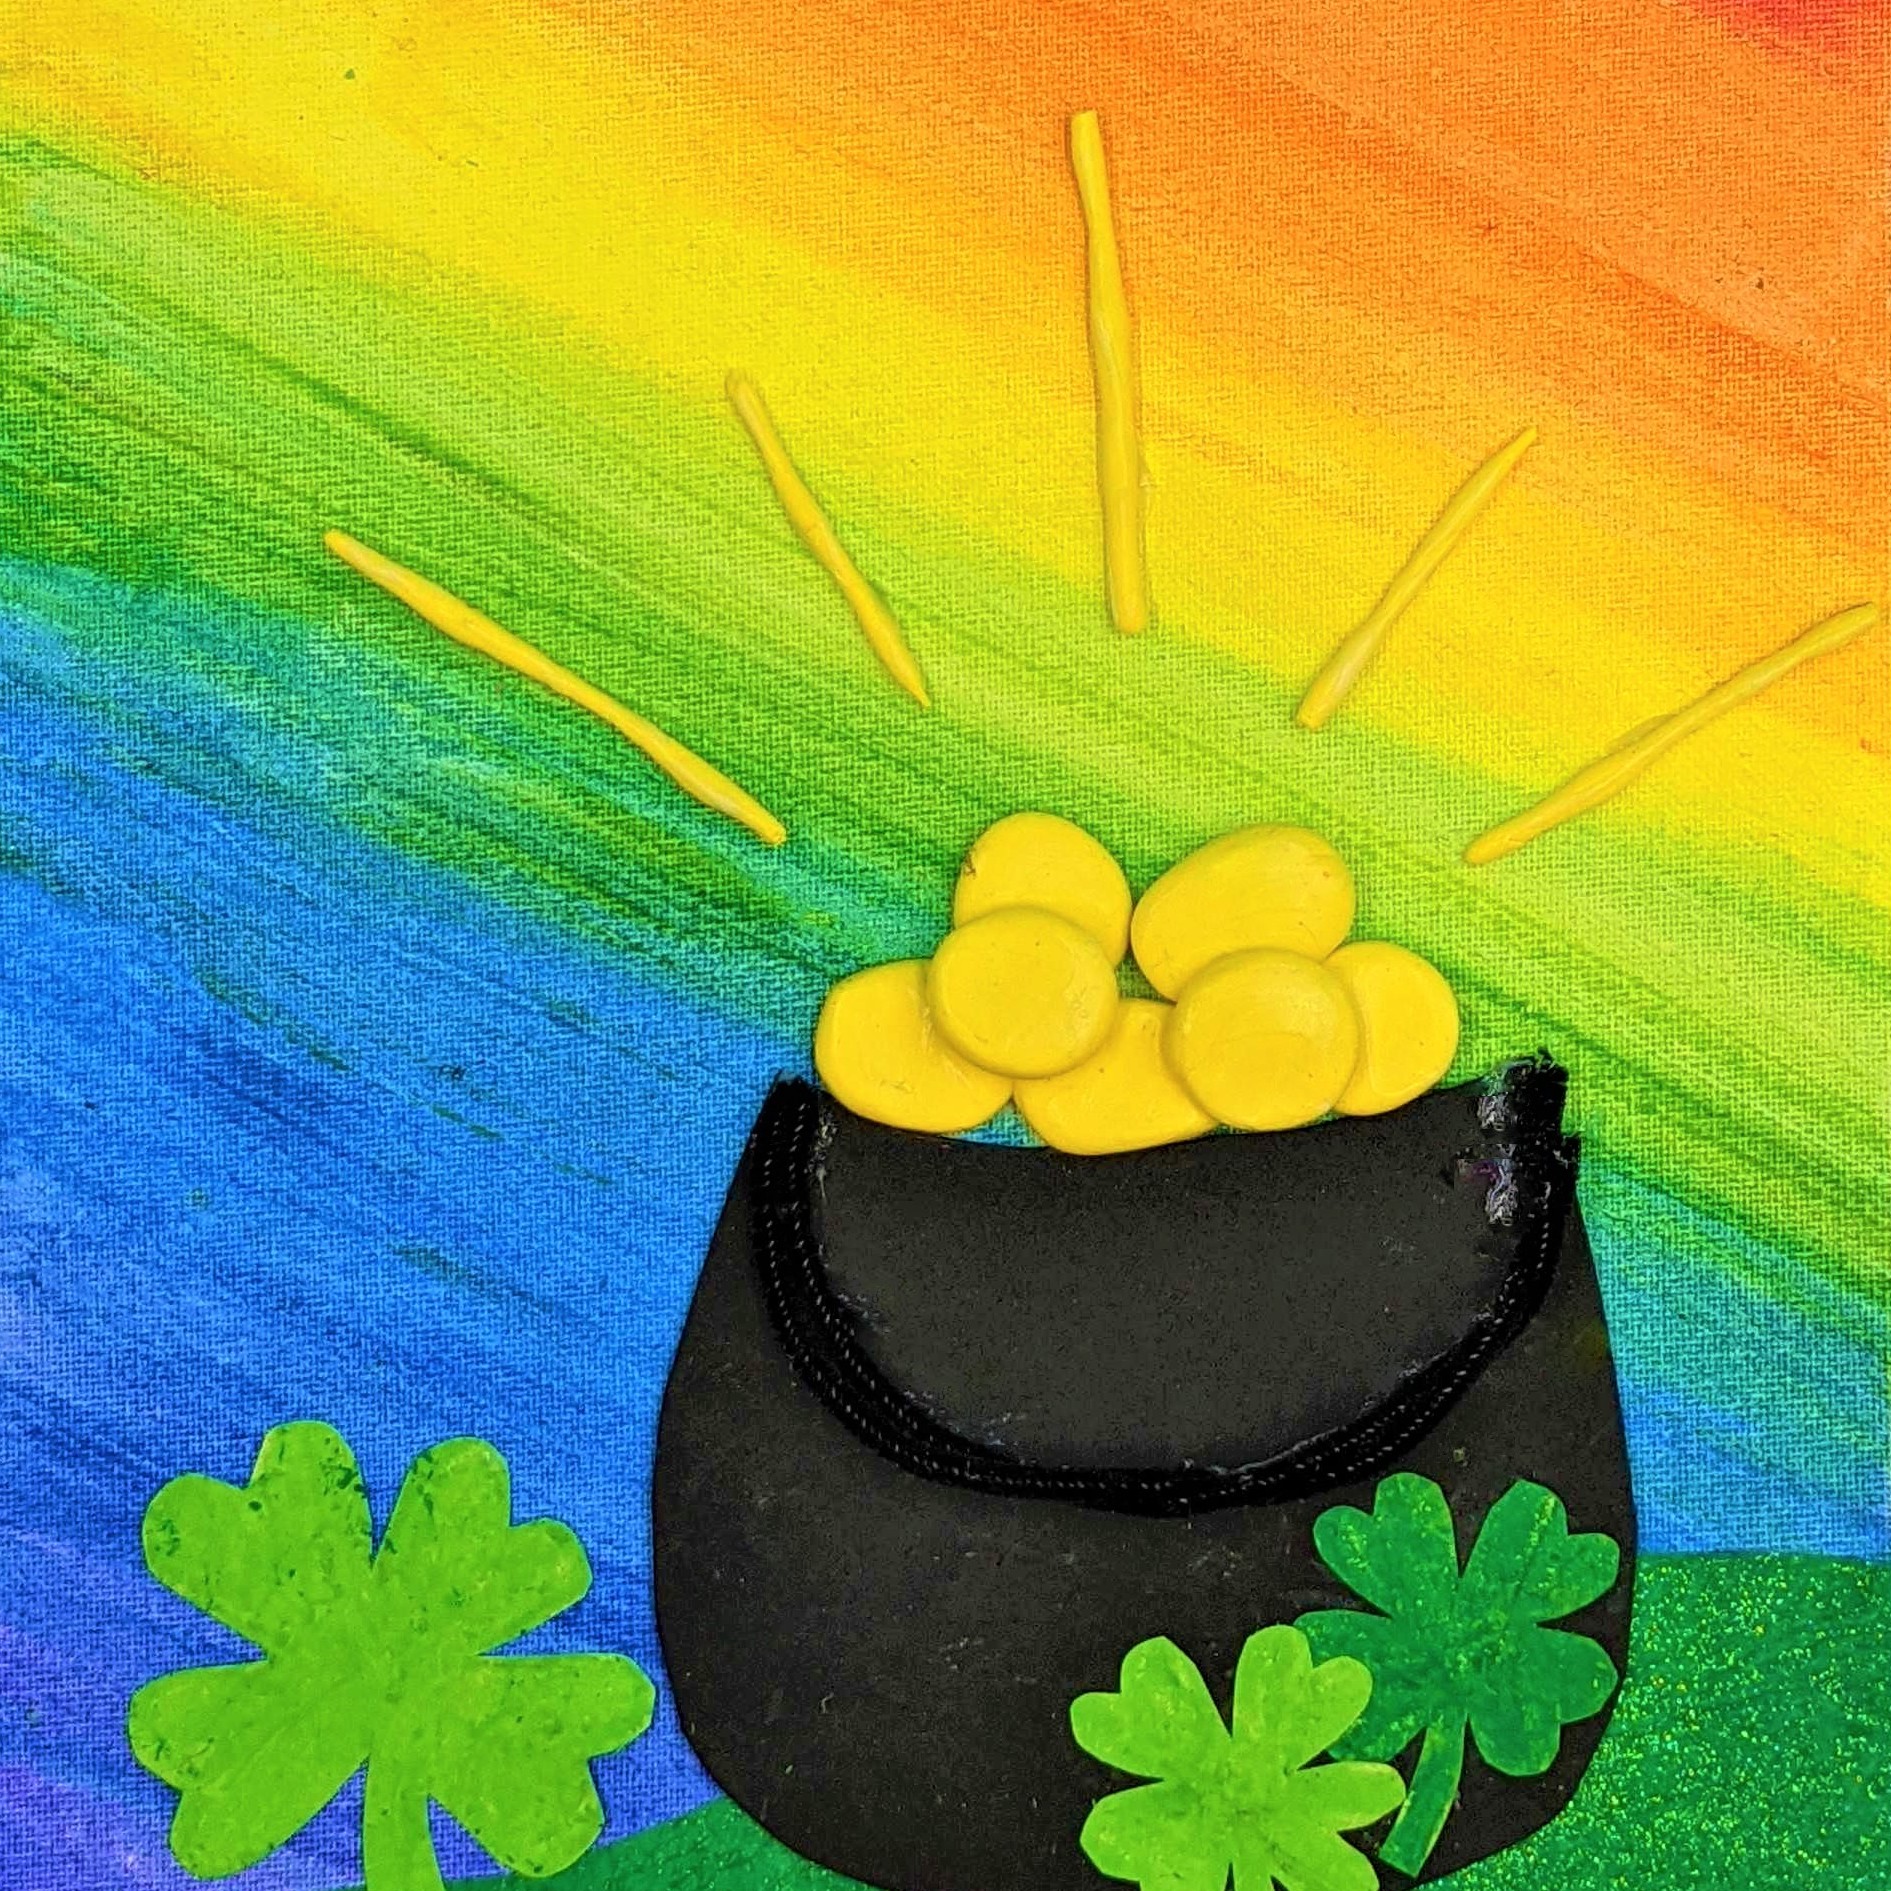 Kidcreate Mobile Studio - Aliso Viejo, St. Patrick's Day Rainbow on Canvas Art Project